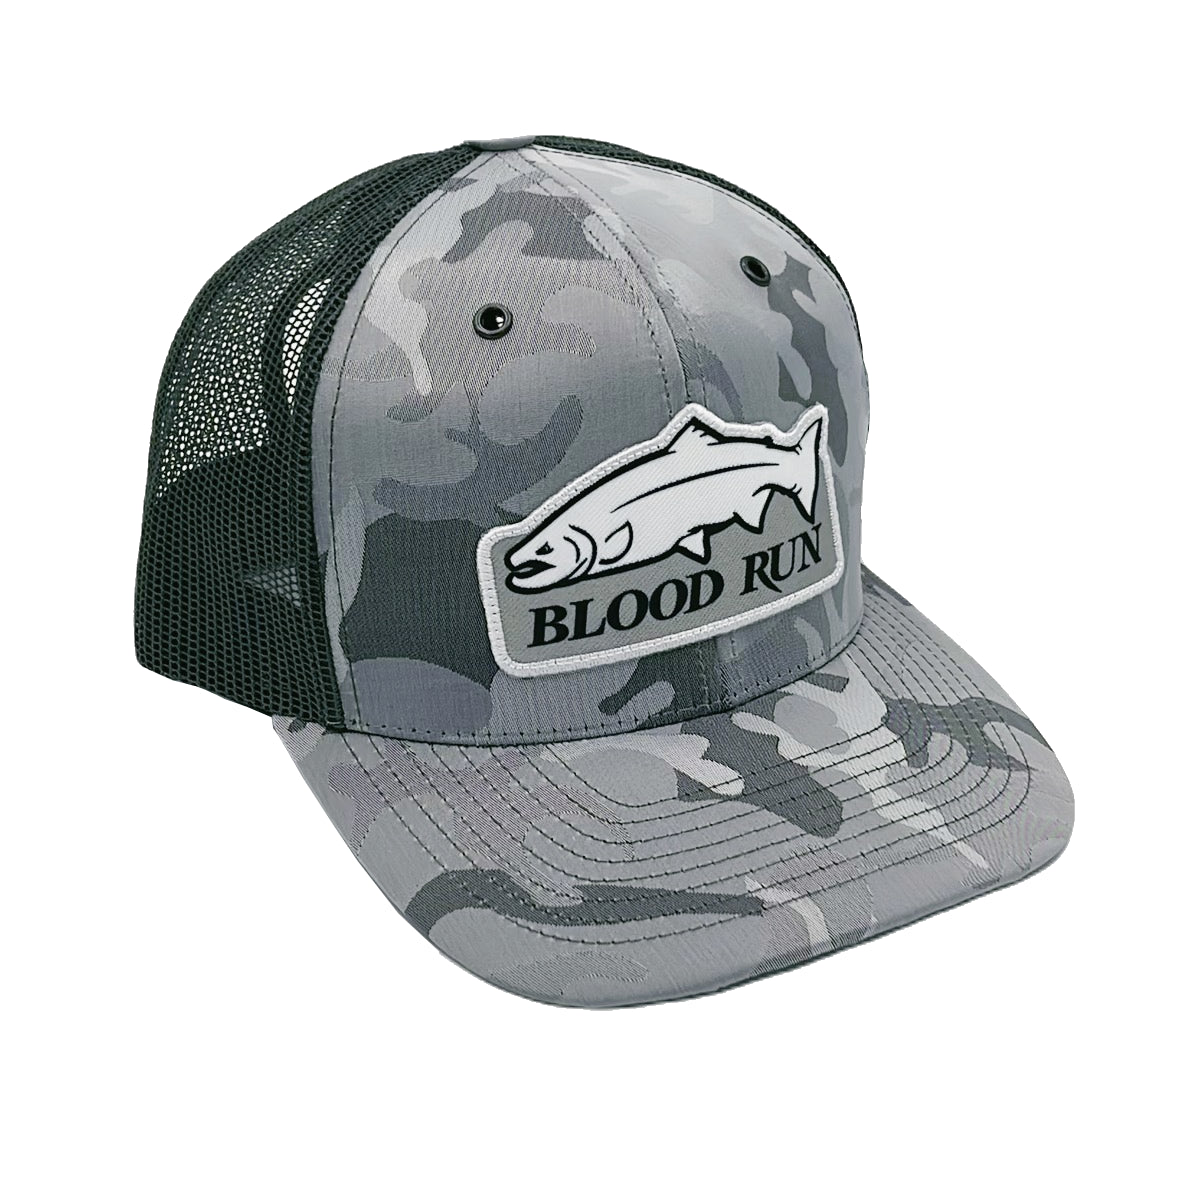 Blood Run Fishing Hats Shirt and Hoodies for Men and Women